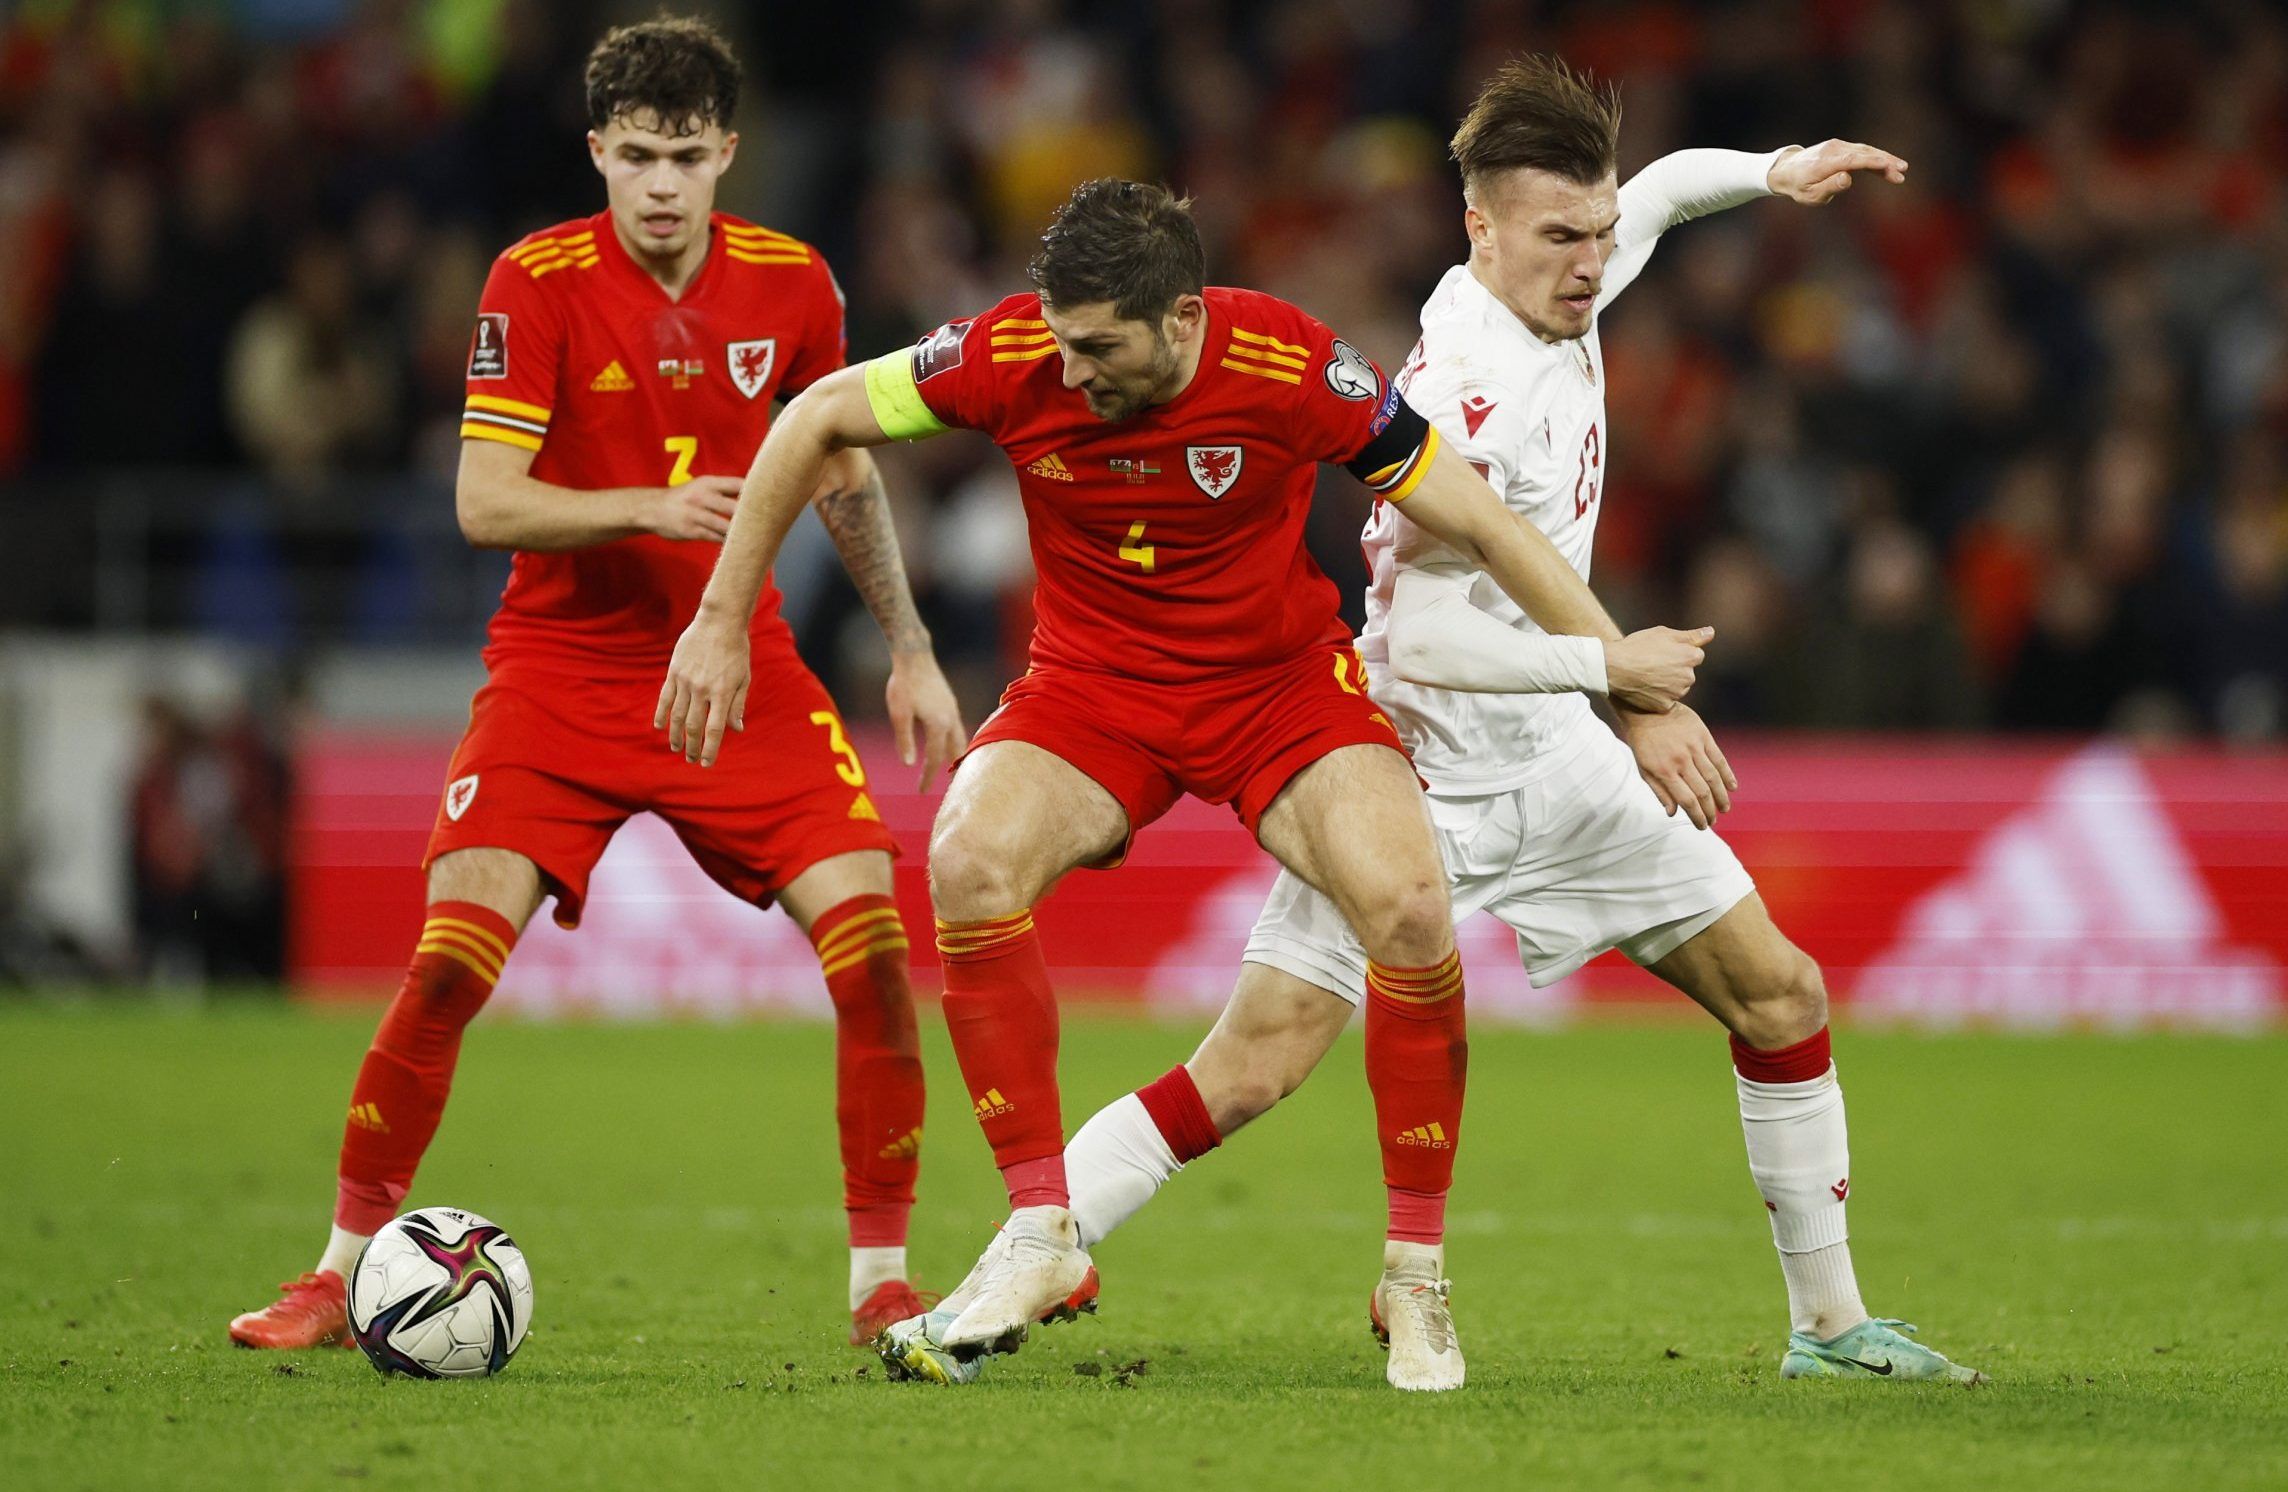 Spurs defender Ben Davies captains Wales during World Cup qualifying win over Belarus